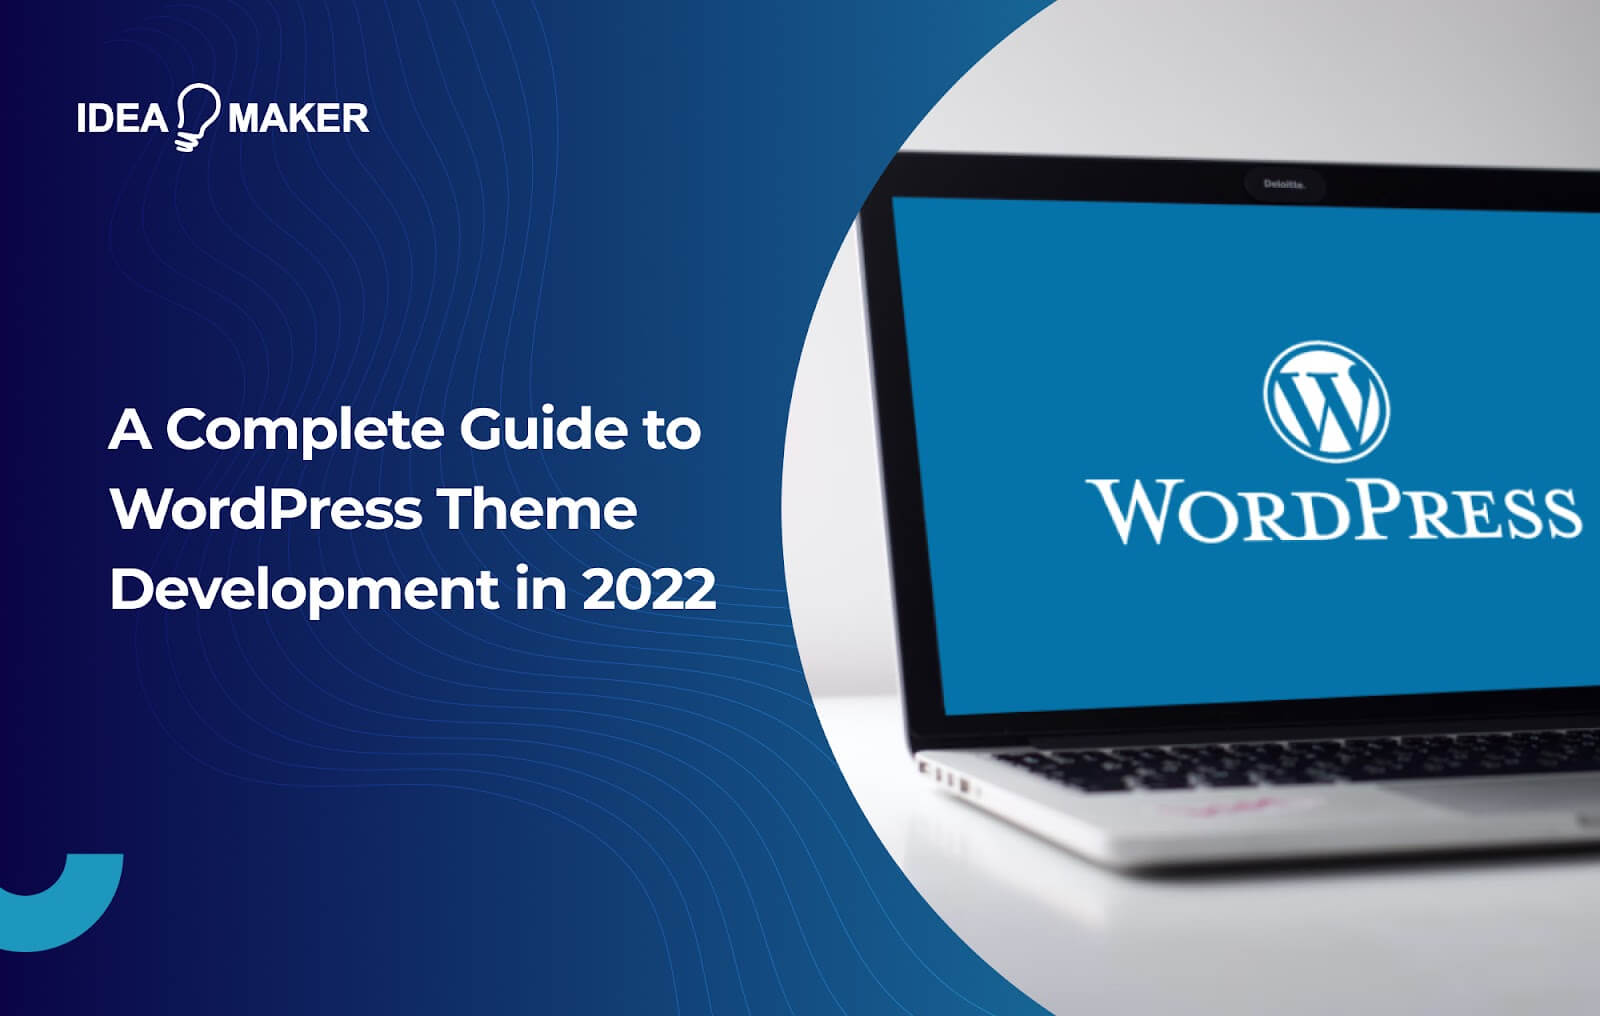 Ideamaker - A Complete Guide to WordPress Theme Development in 2022